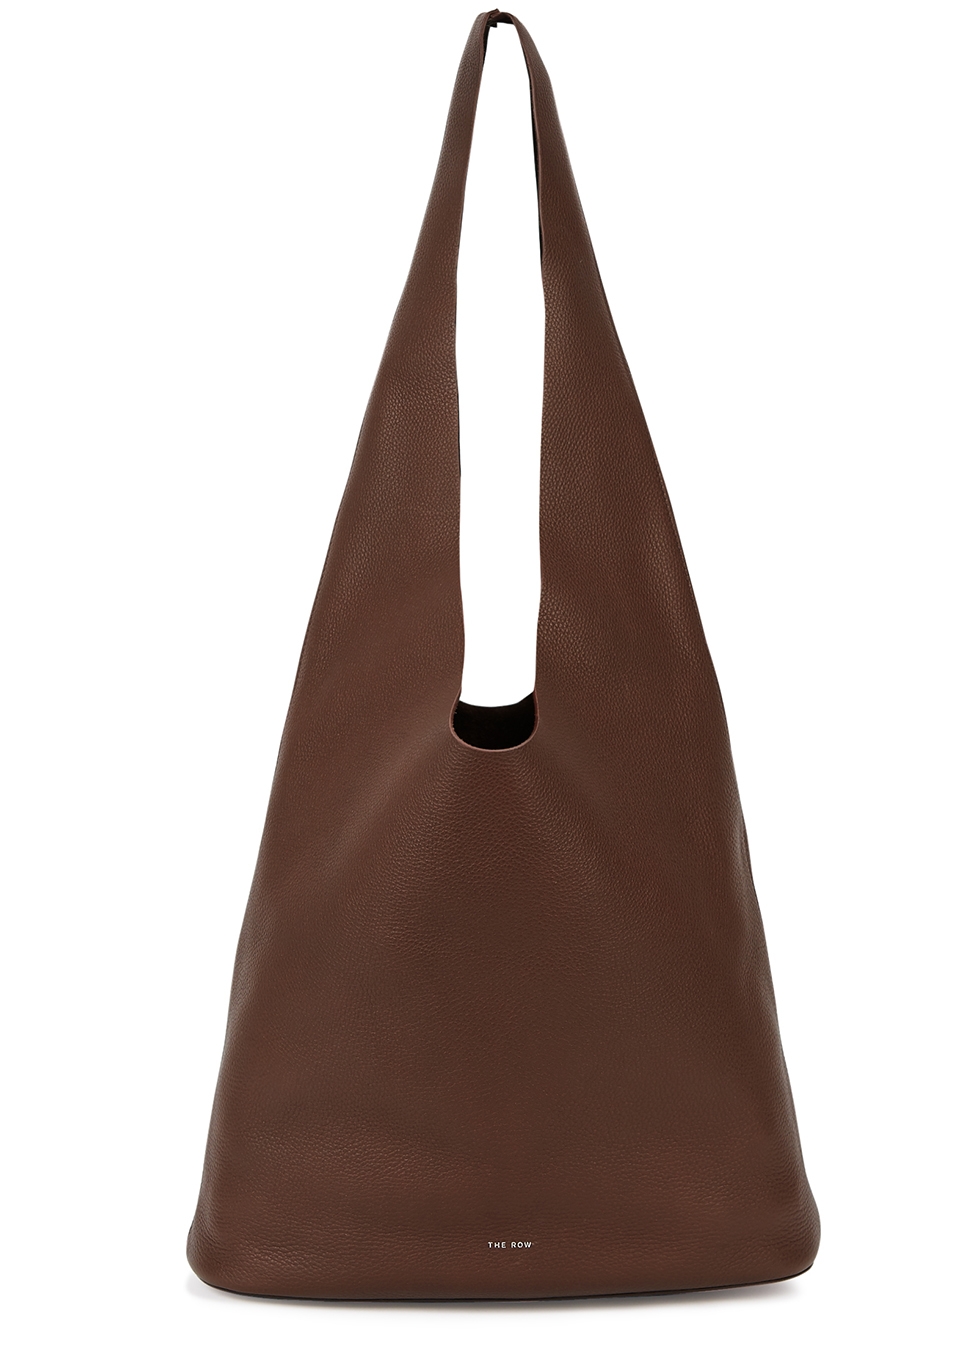 THE ROW Bindle Three brown leather shoulder bag - Harvey Nichols